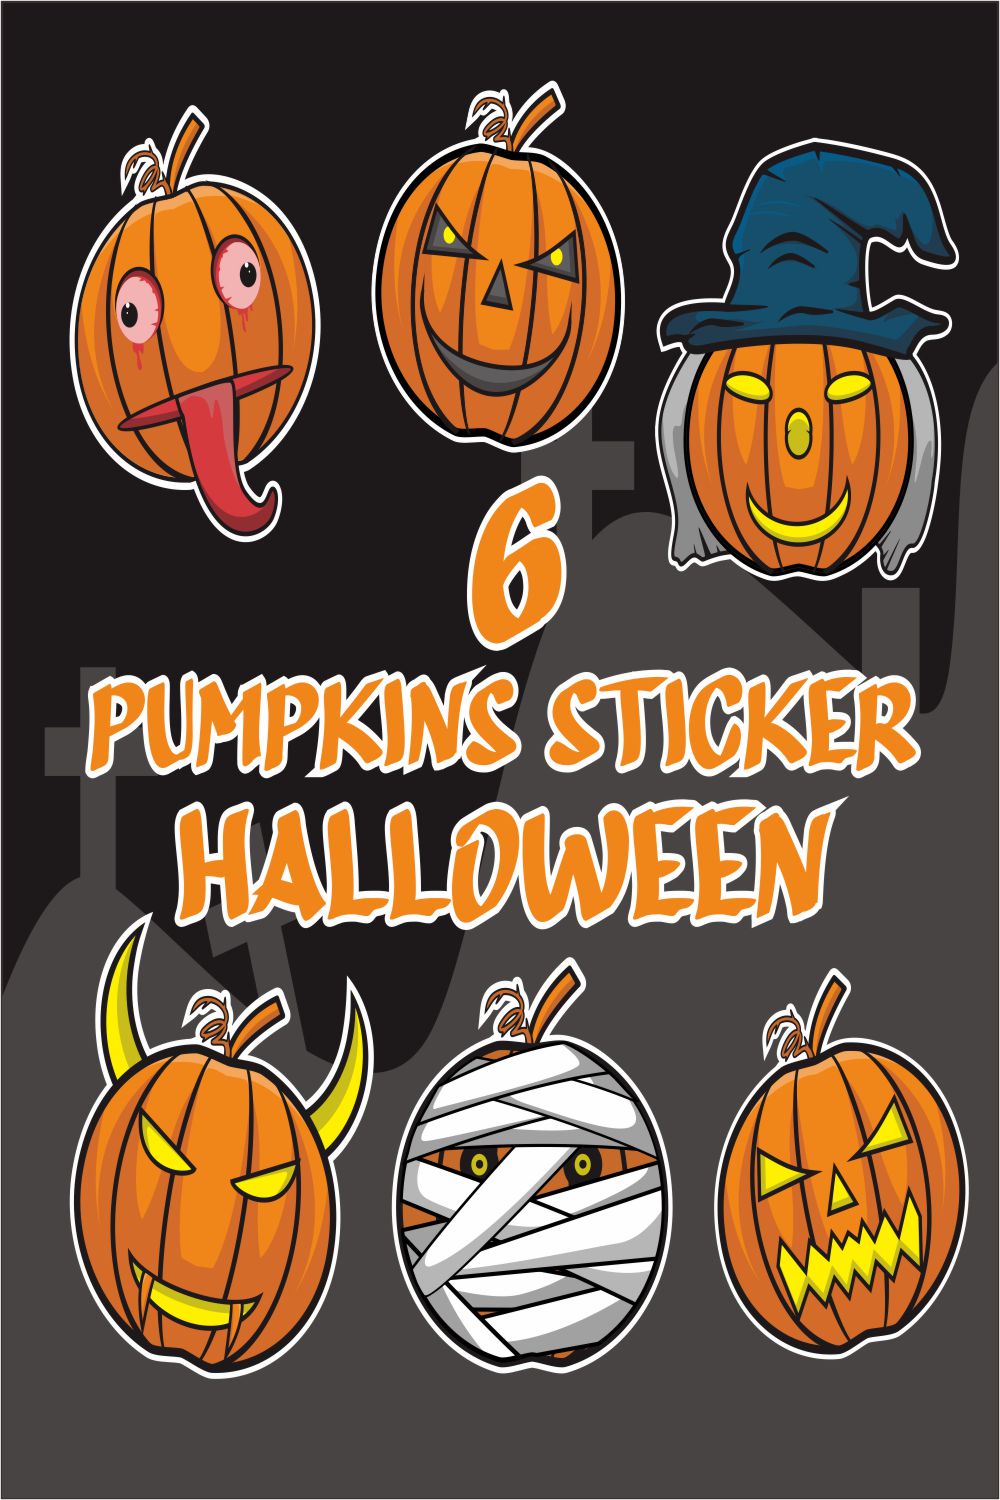 6 Pumpkins Halloween Stickers pinterest image.